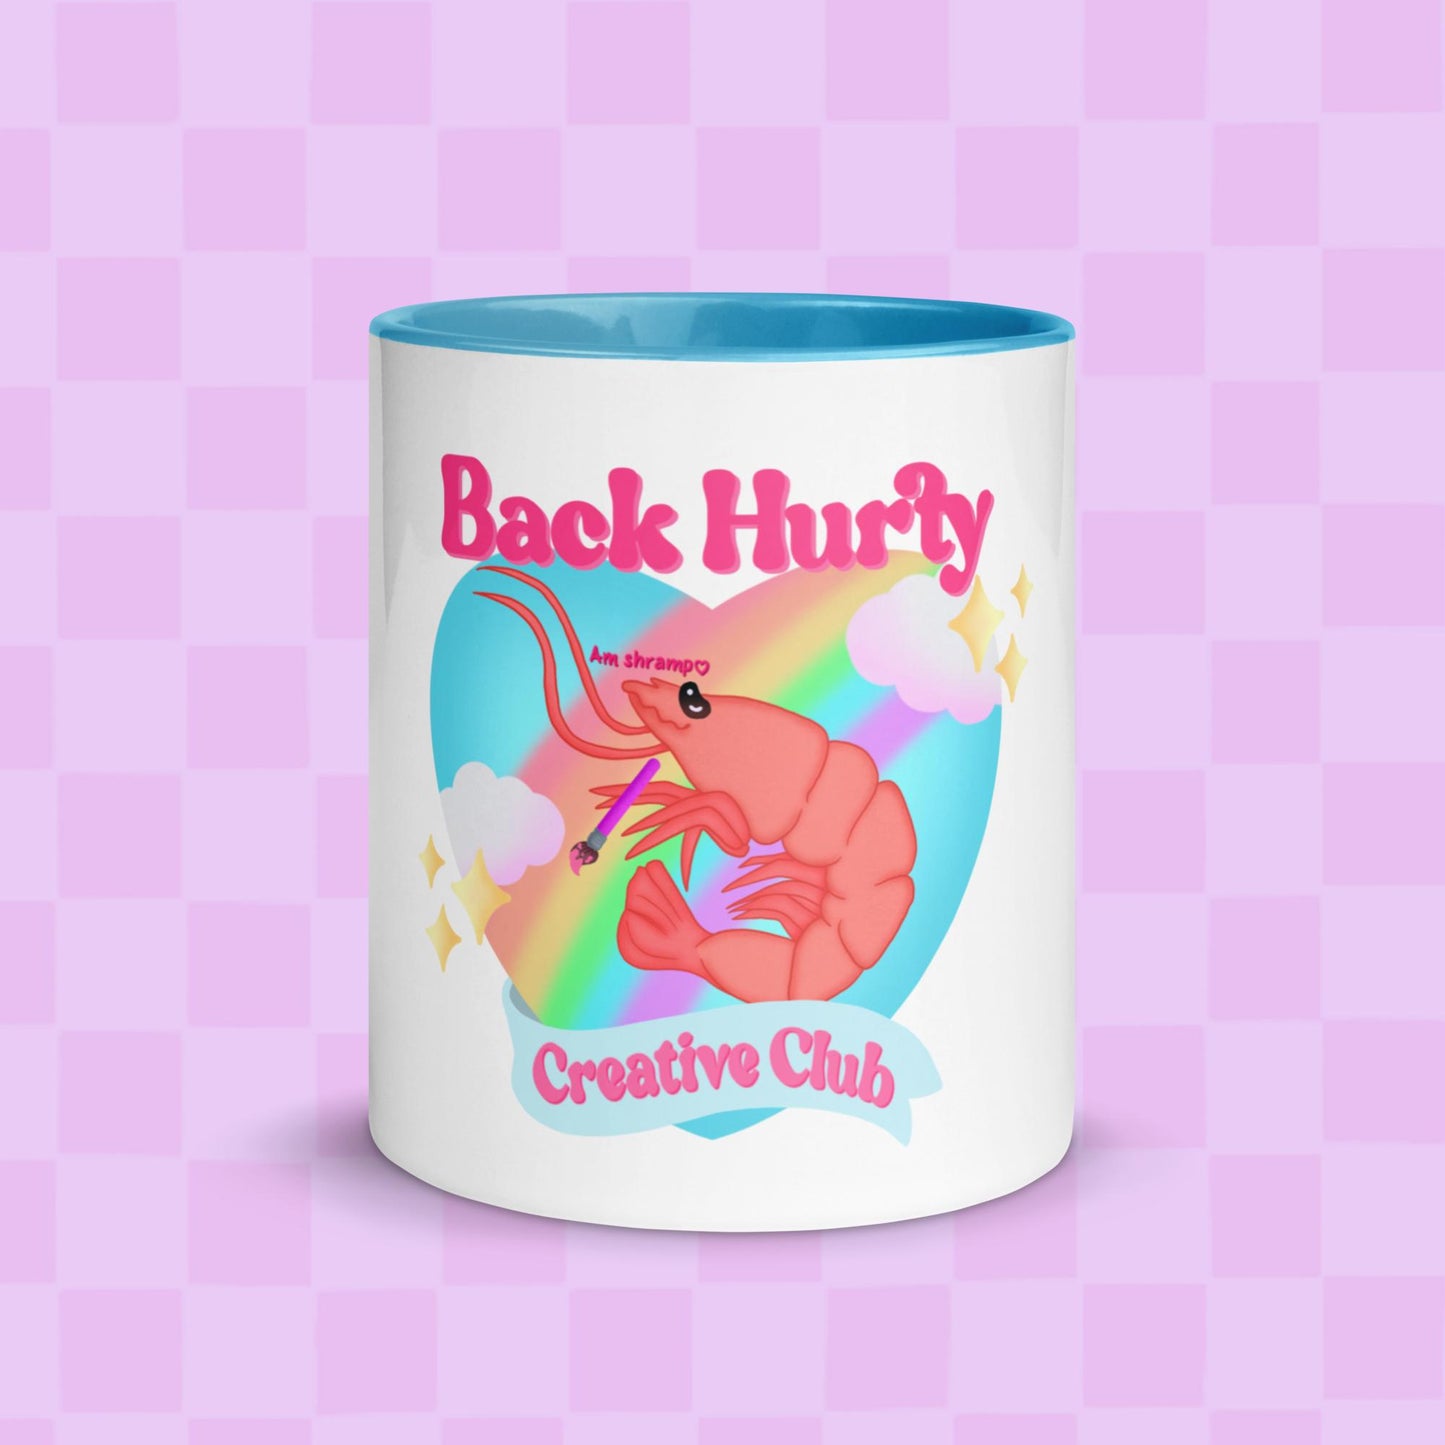 Back hurty mug with color inside